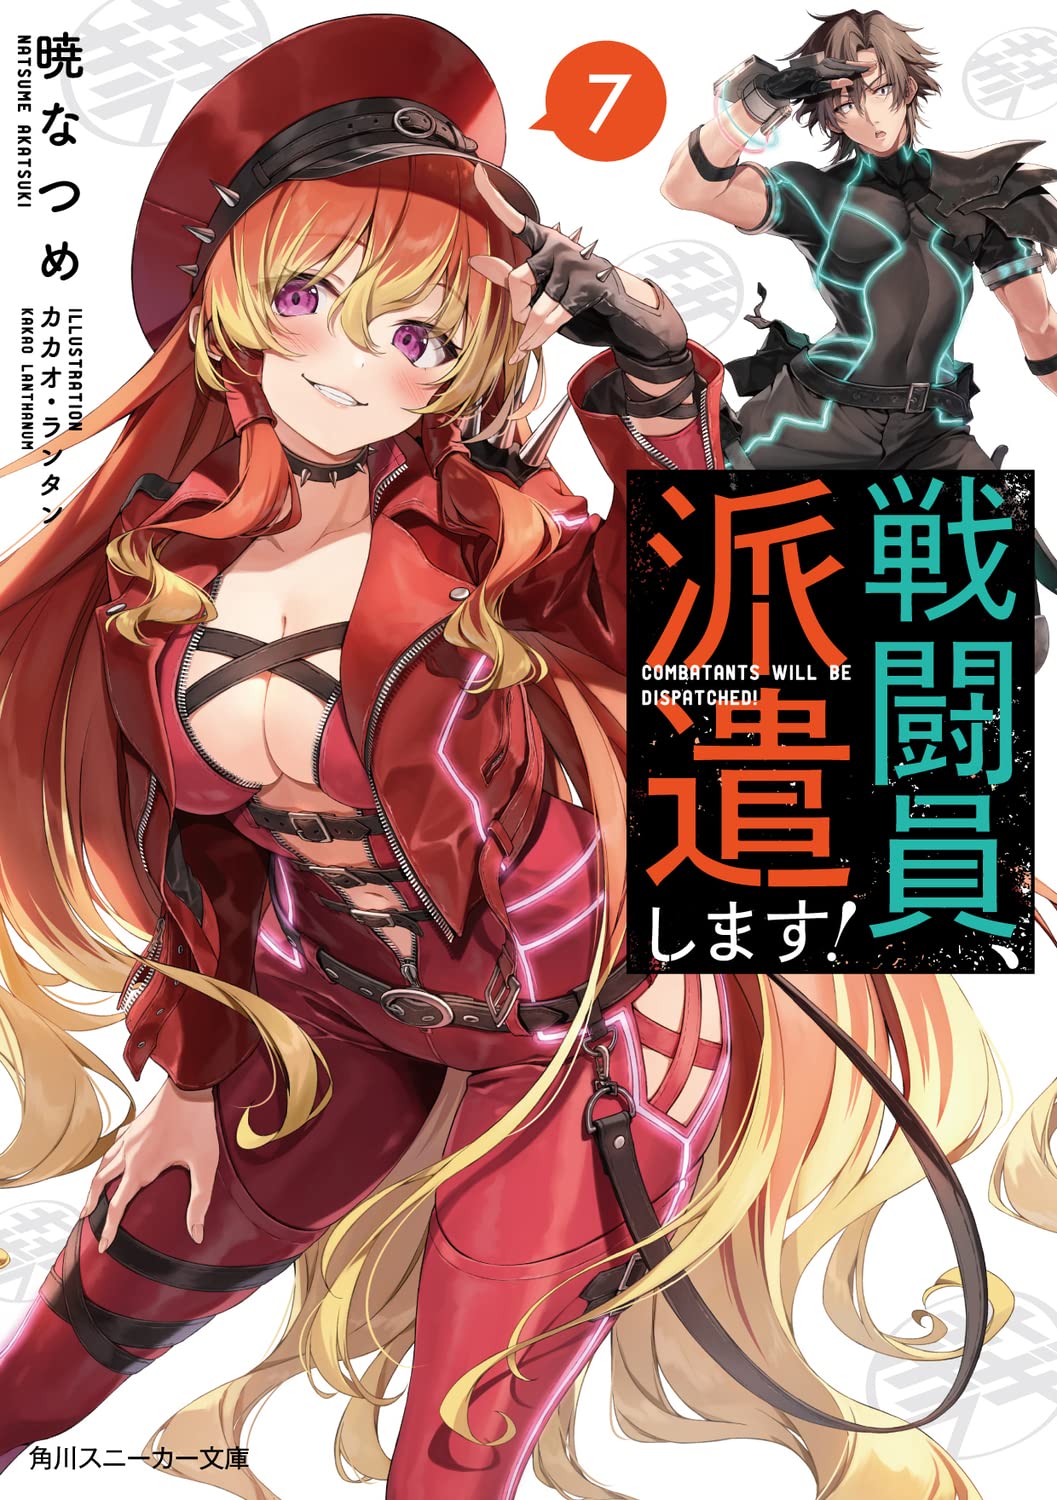 Fênix No Sekai: Ranking semanal de vendas de Light Novels (24-30